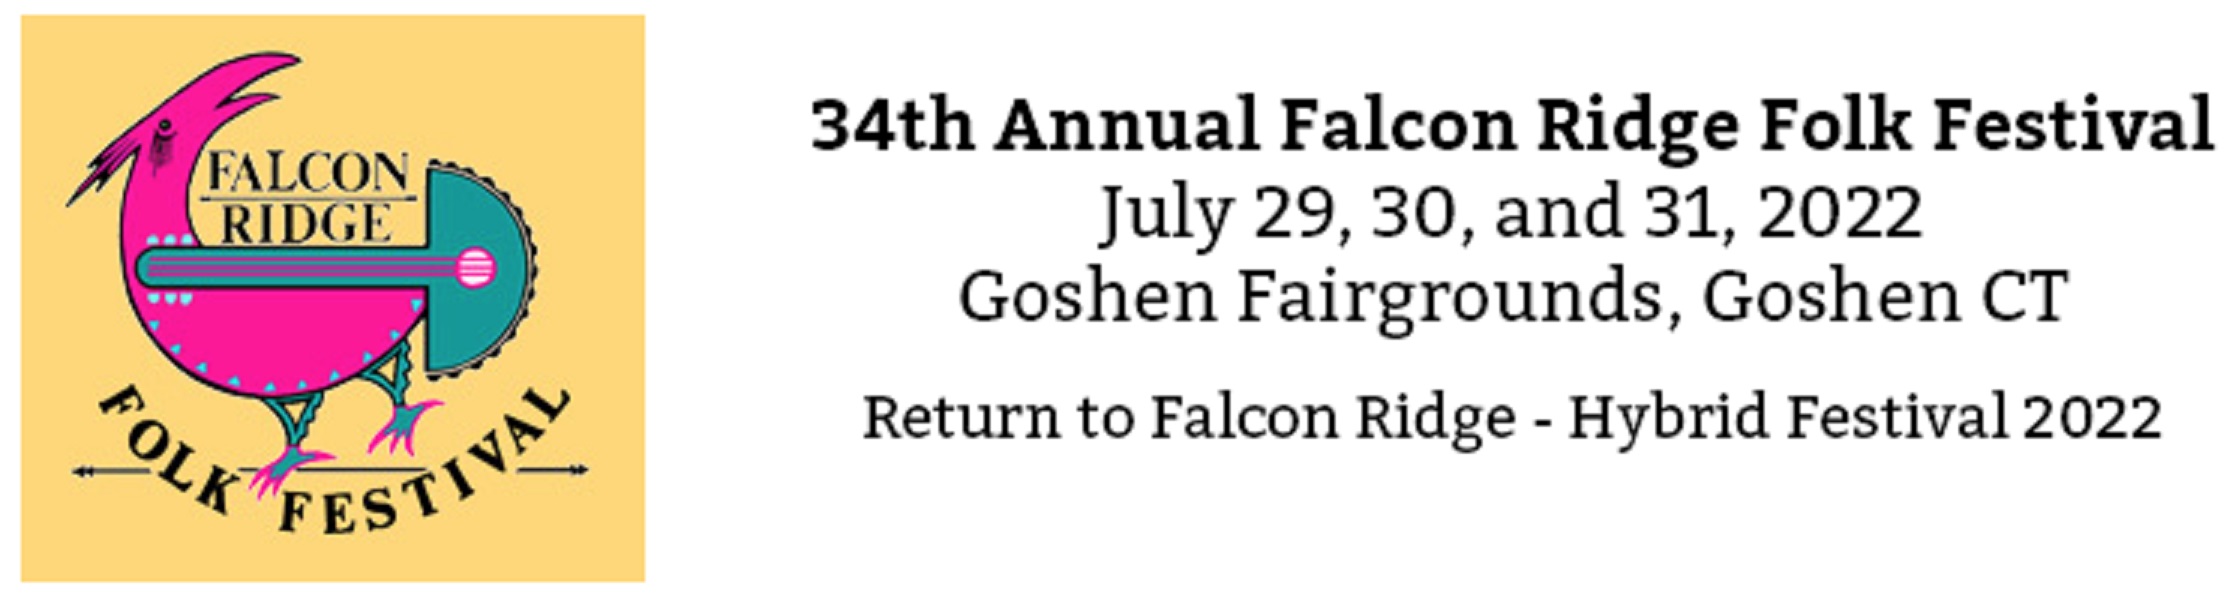 34th Falcon Ridge Folk Festival @ Goshen Fairgrounds